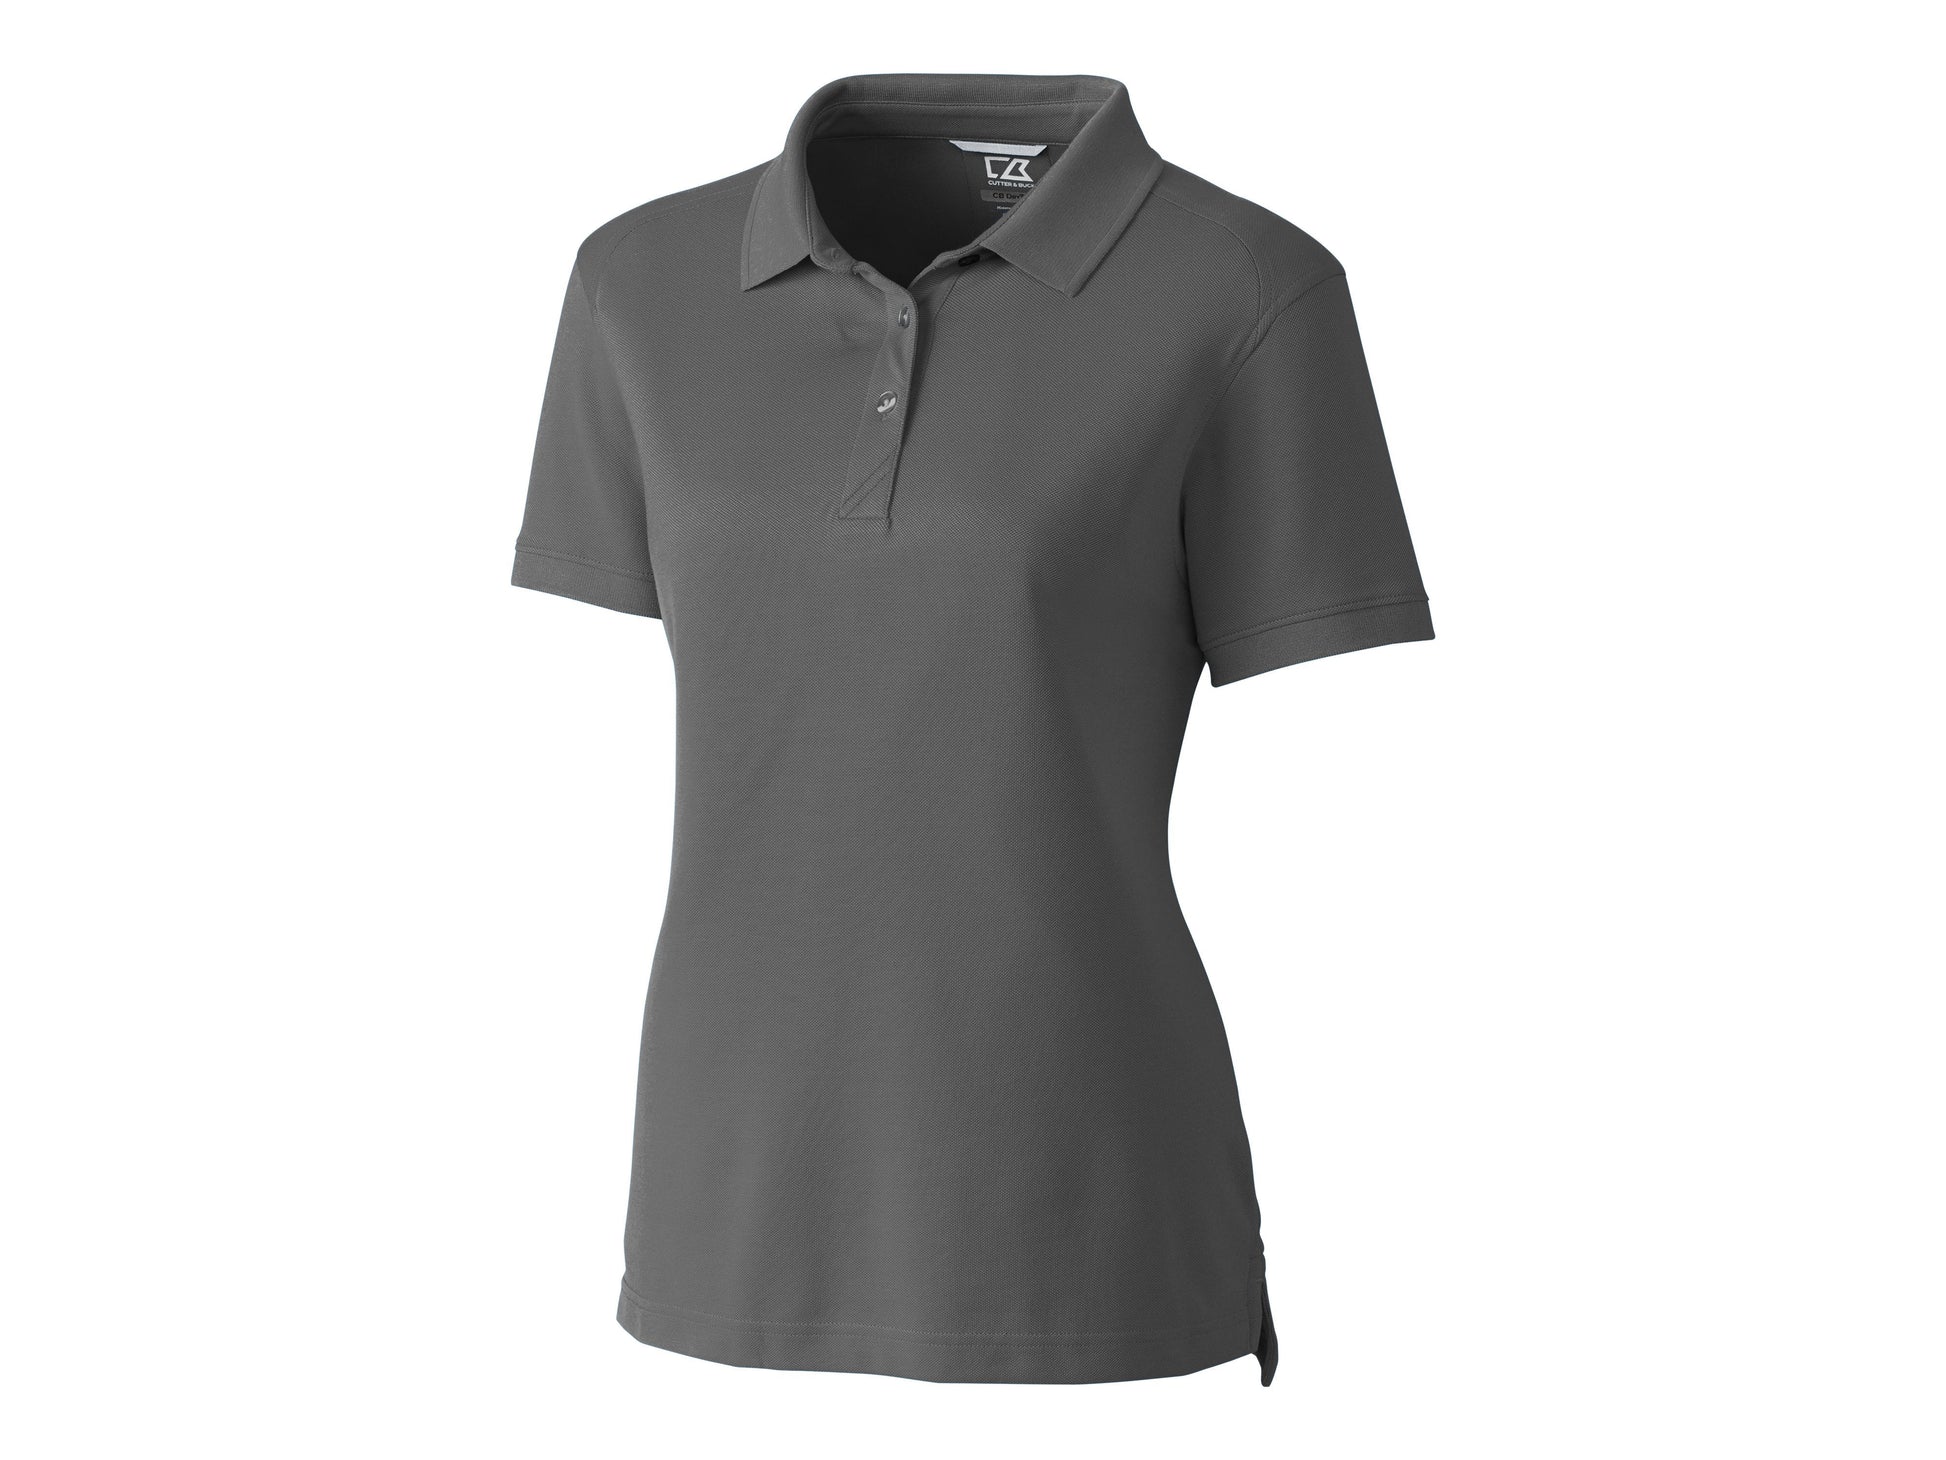 Cutter and Buck Shirts Advantage Polo (Women's Cut) - LCK08685 - Elemental Grey